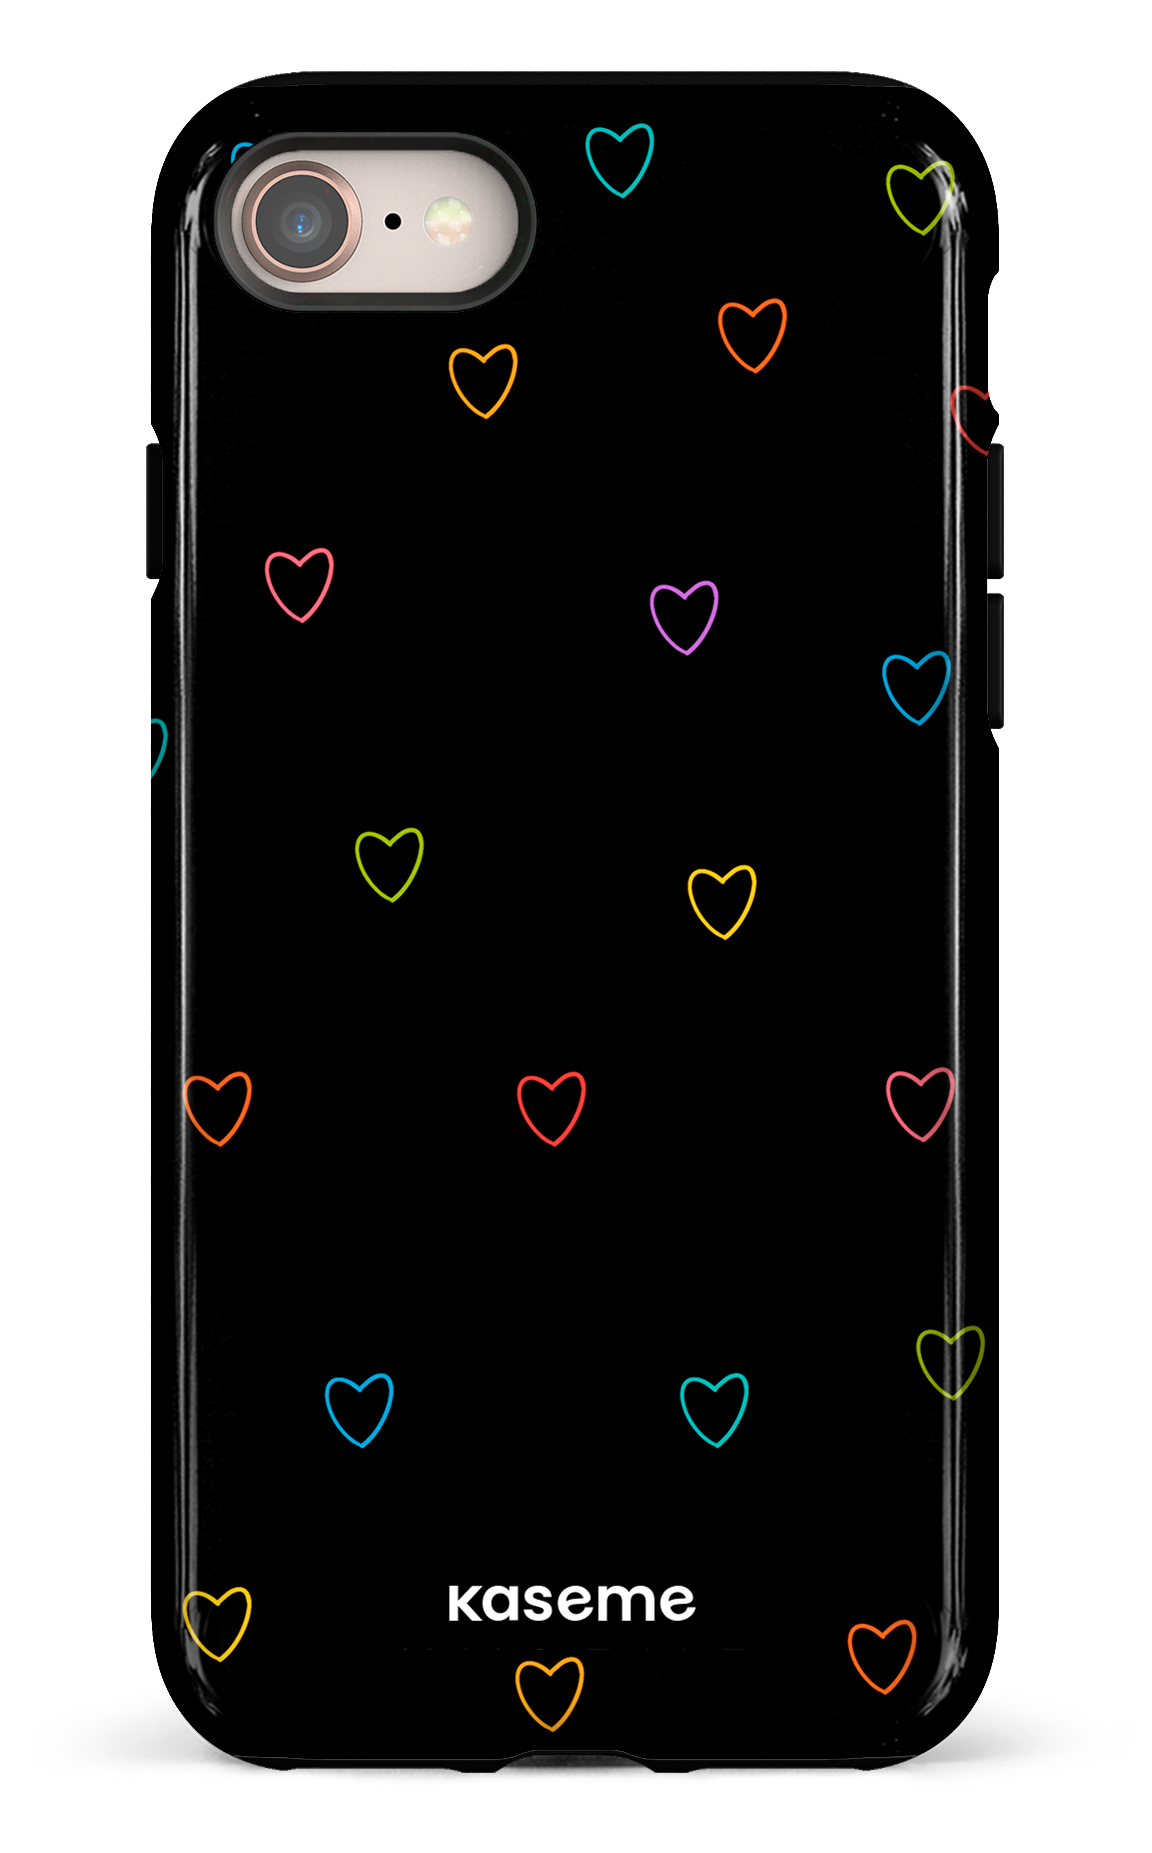 Love Wins - iPhone 7